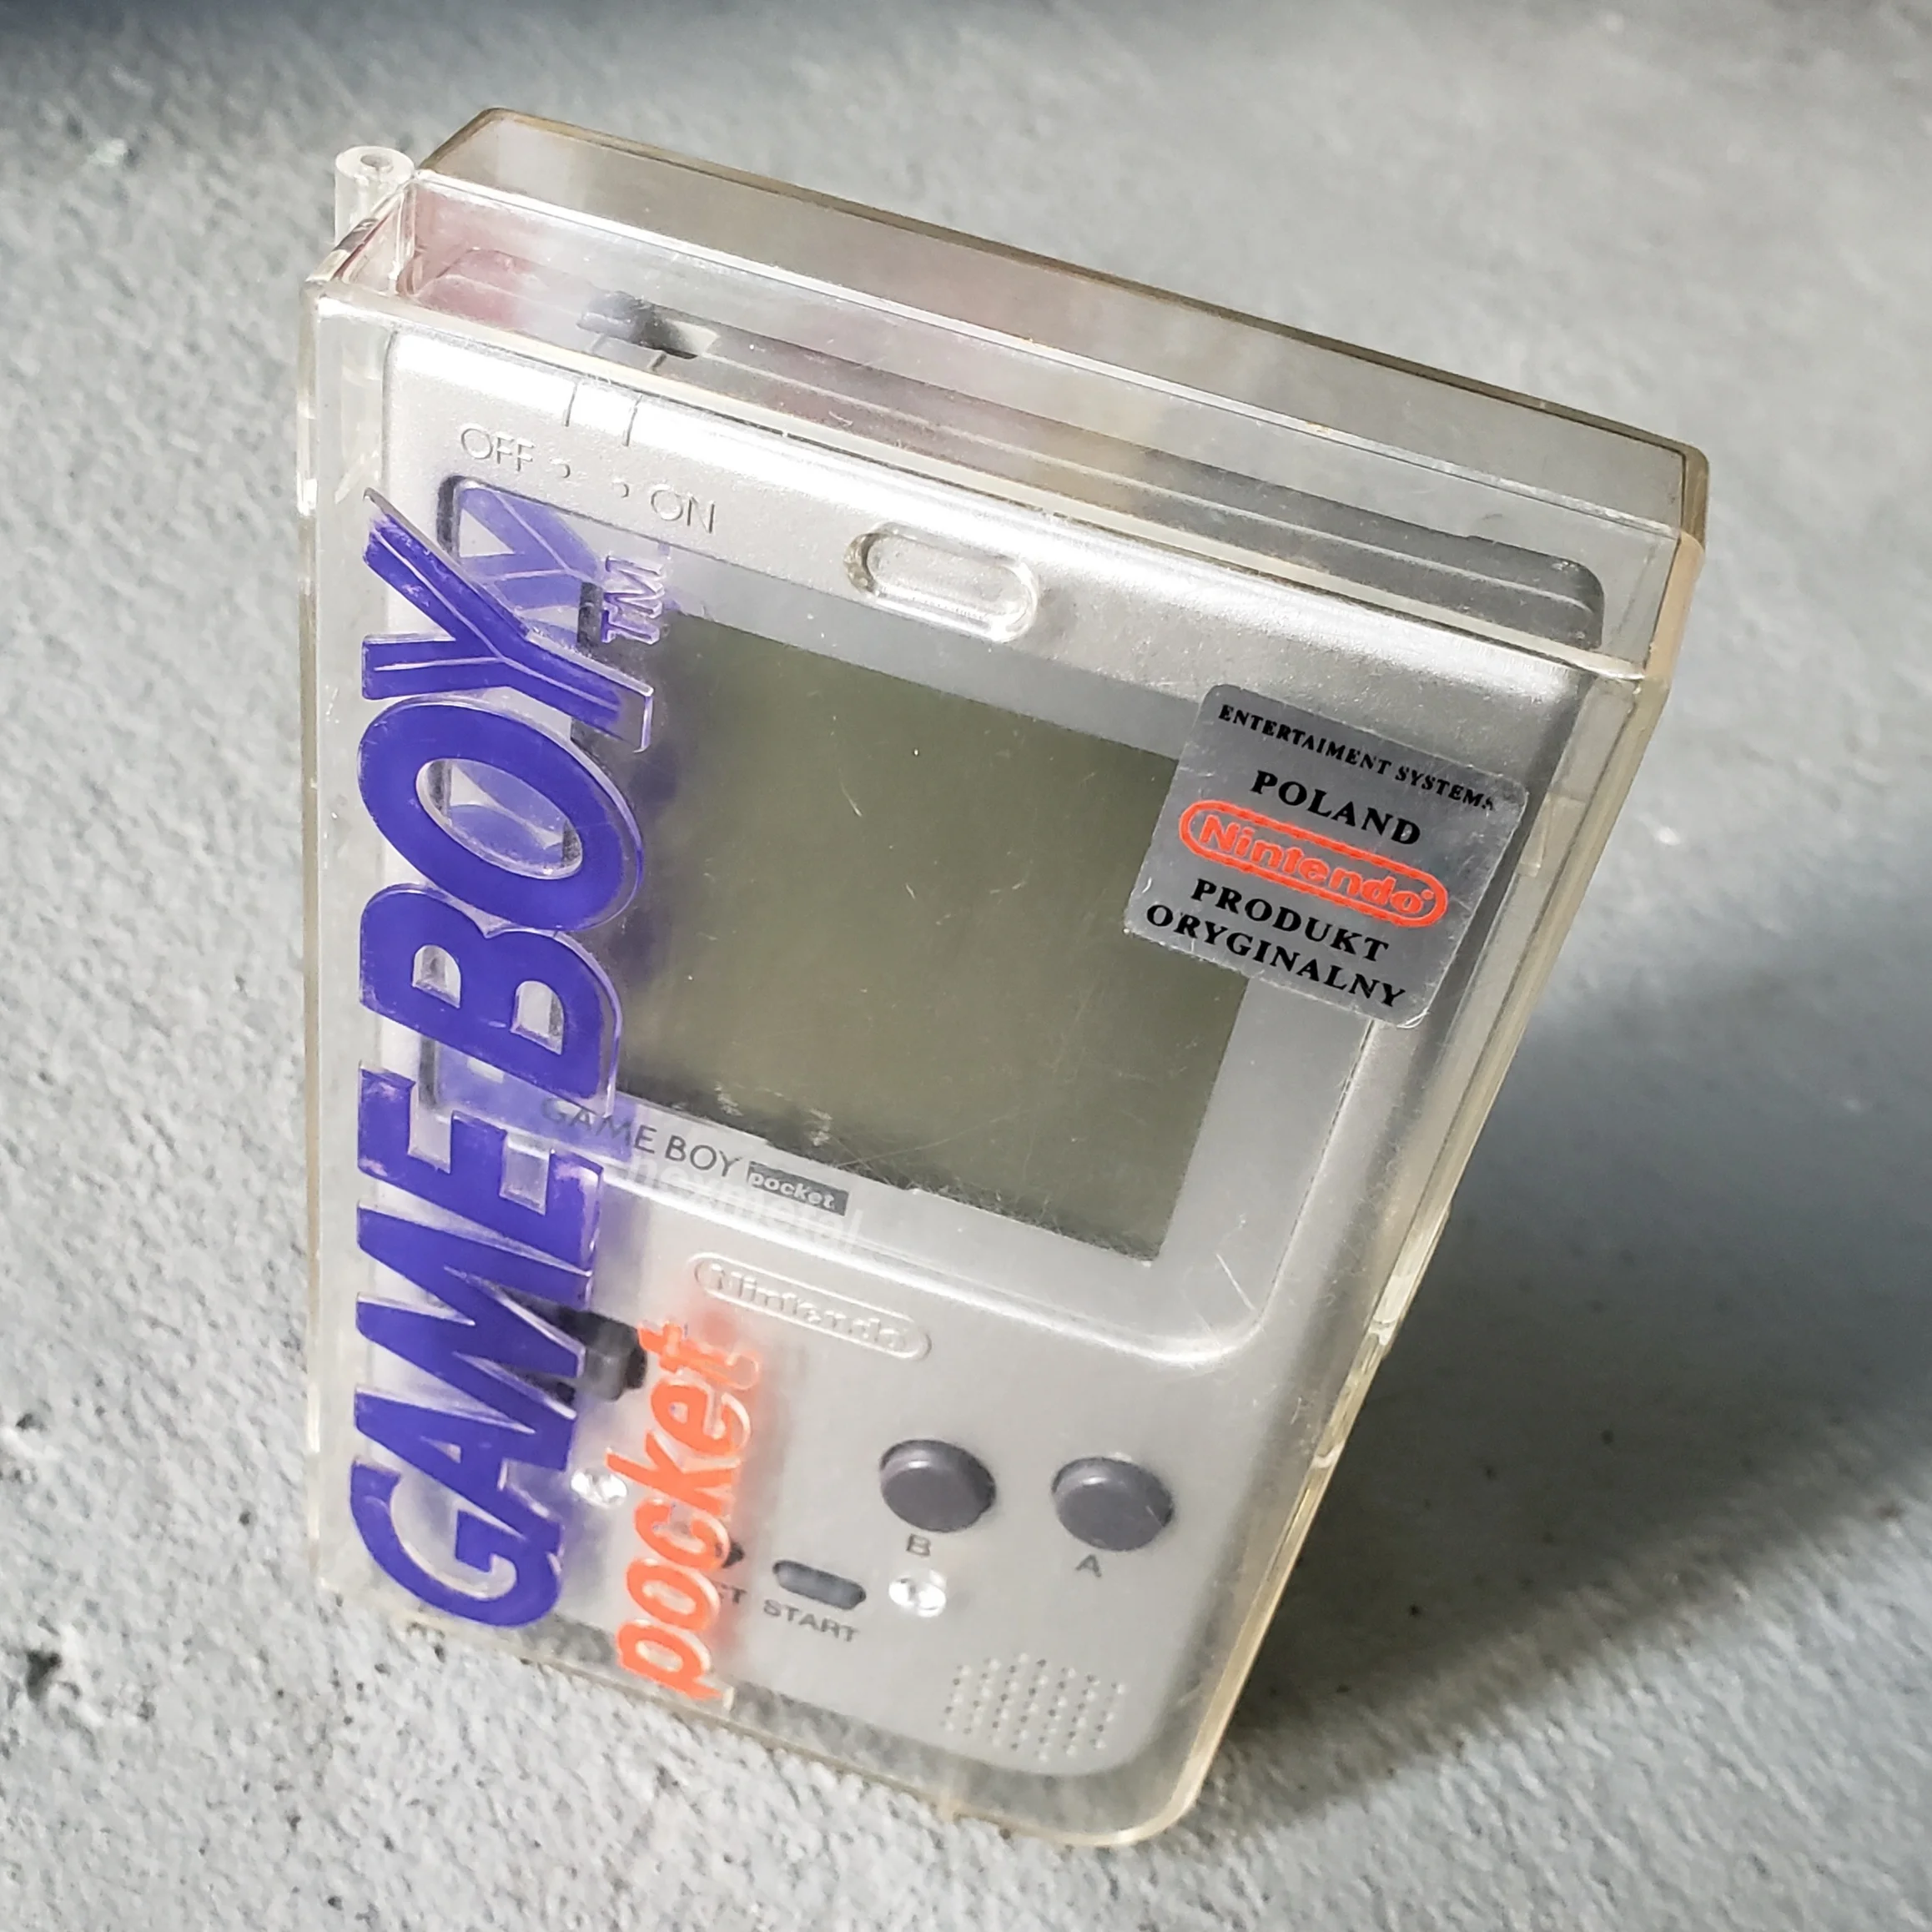  Nintendo Game Boy Pocket Silver Console [PL]